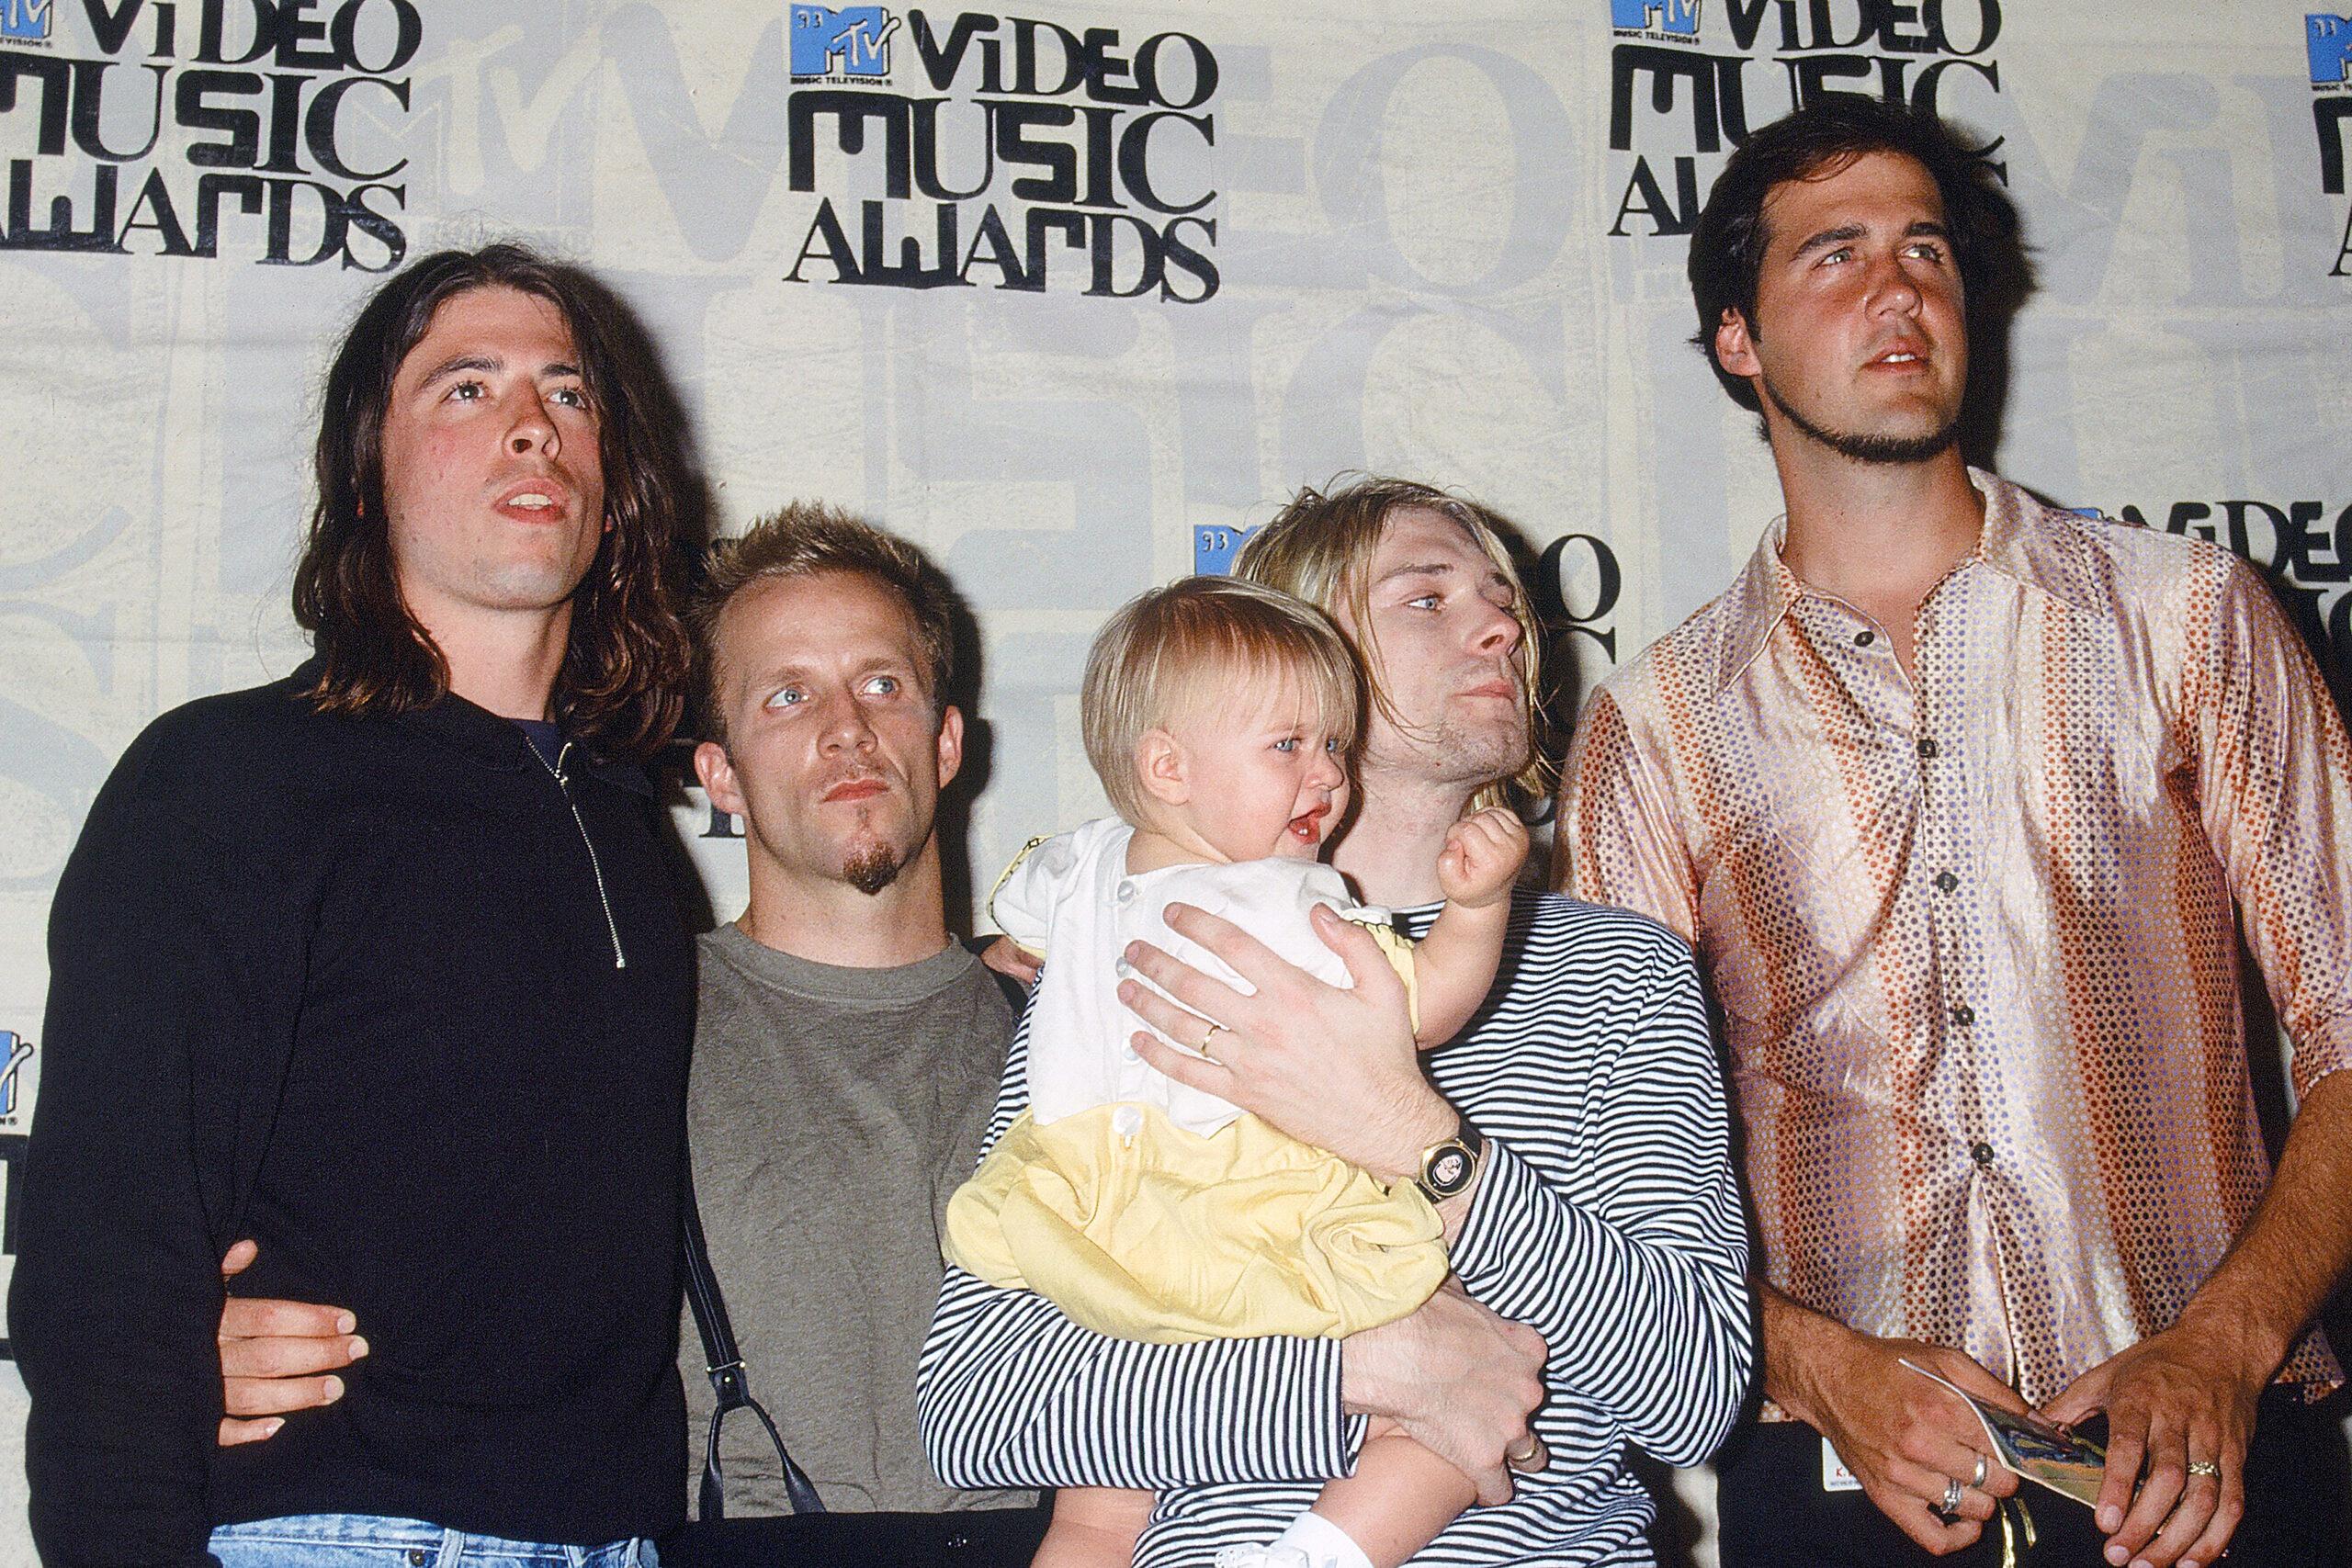 Nirvana, Frances Bean Cobain, Kurt Cobain at the 10th Annual MTV Video Music Awards at the Universal Ampitheater on September 2, 1993 in Los Angeles, CA Newscom/(Mega Agency TagID: khphotos672075.jpg) [Photo via Mega Agency]